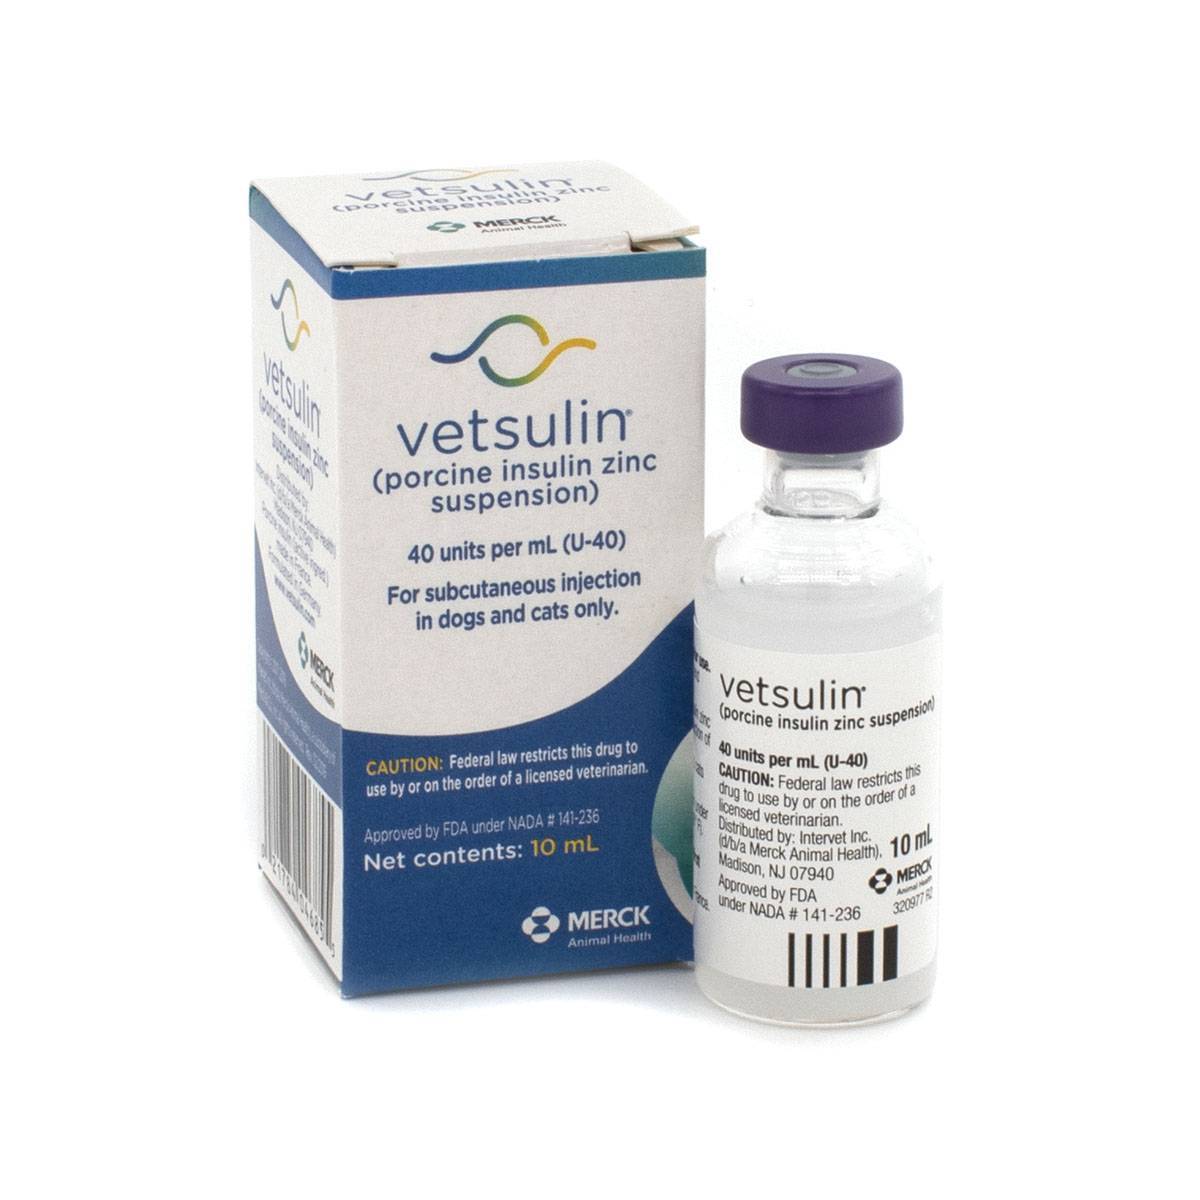 Vetsulin: Porcine Insulin Zinc Suspension for Cats and Dogs - VetRxDirect